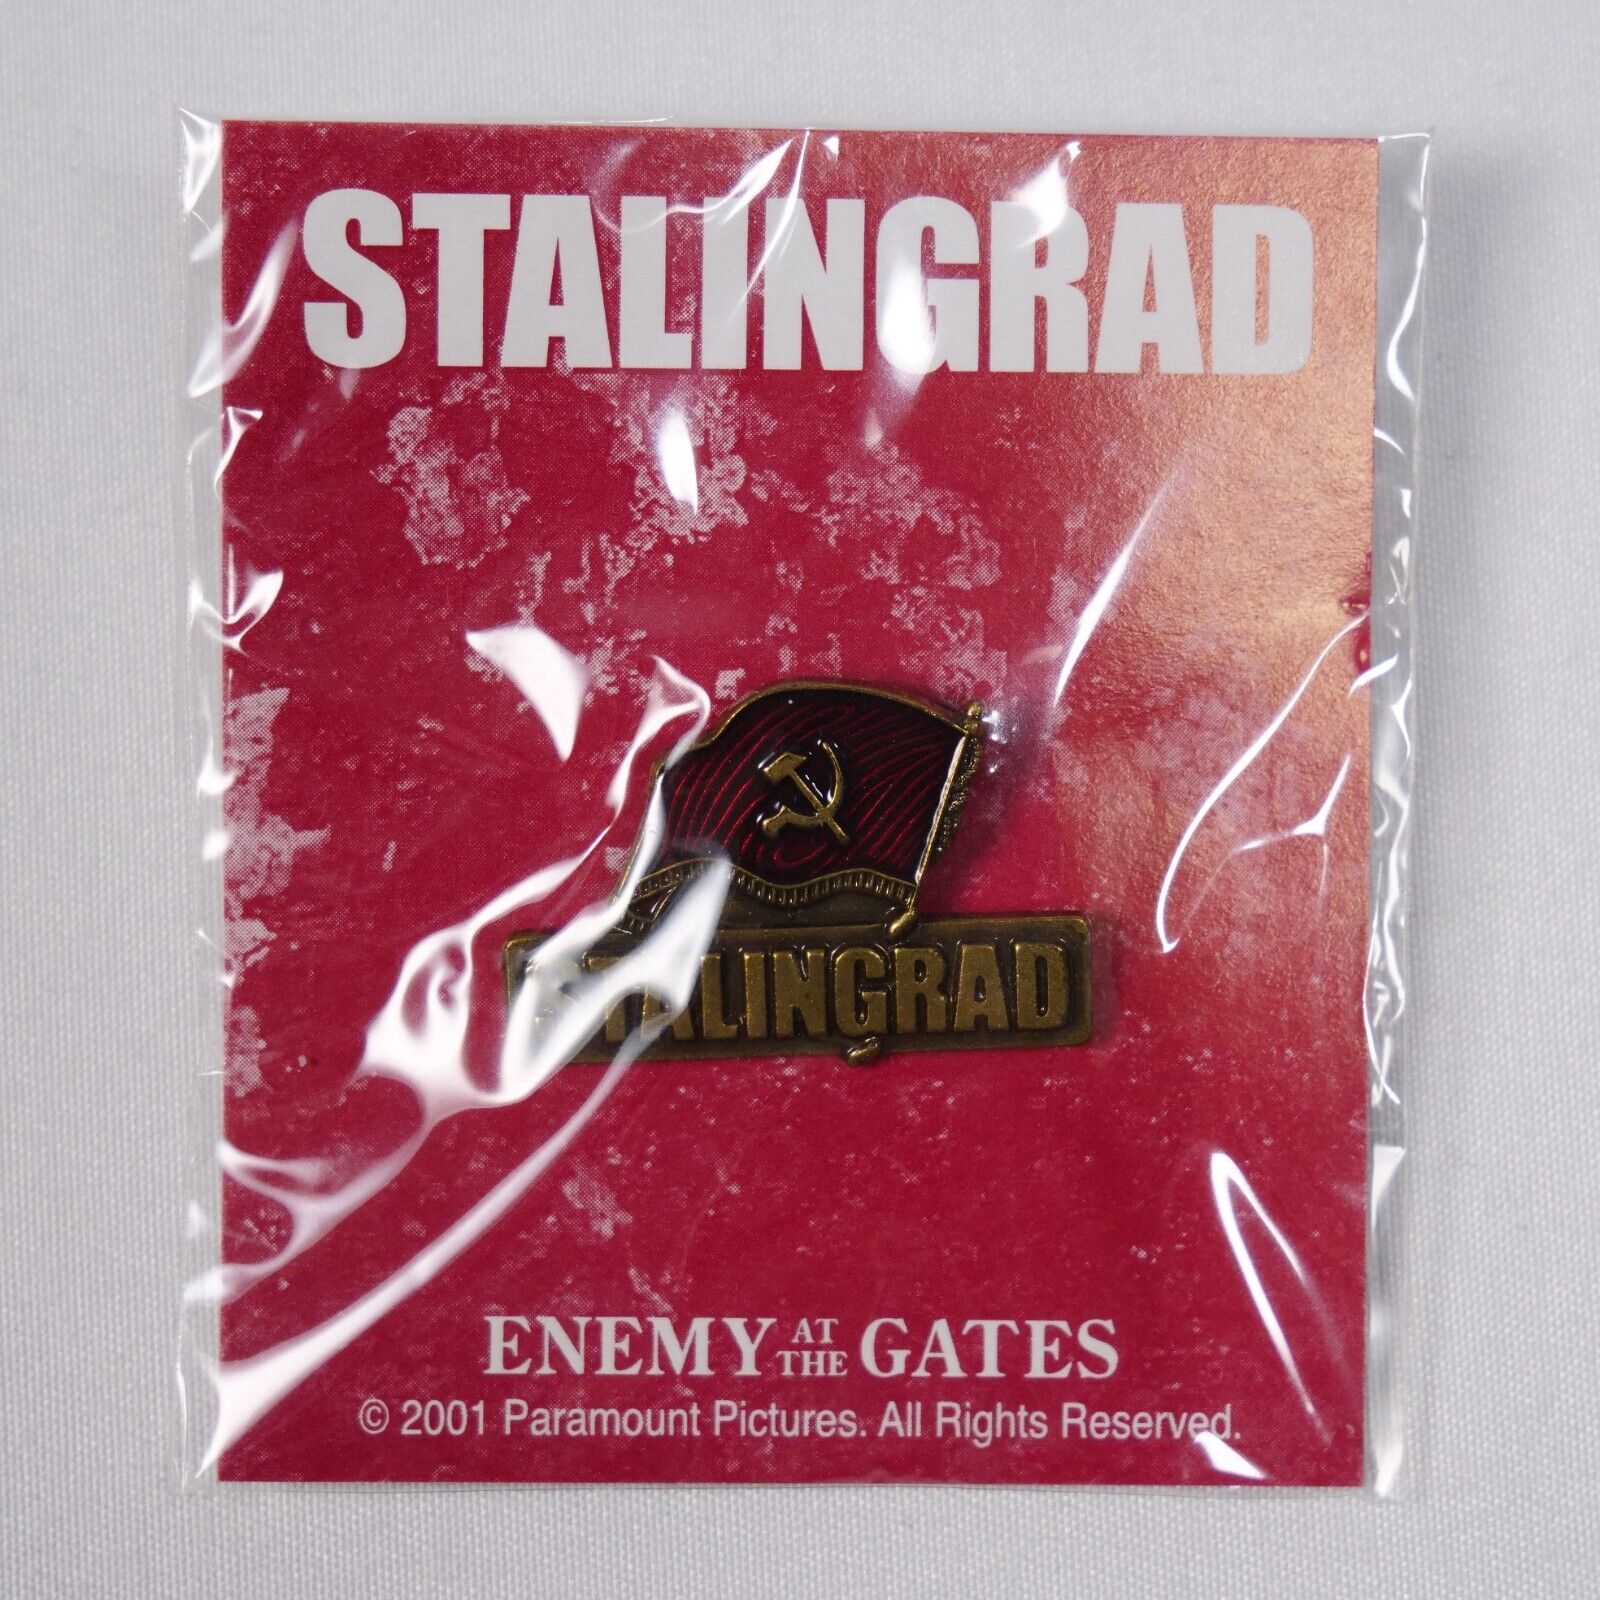 Movie Enemy at the Gates Stalingrad pins